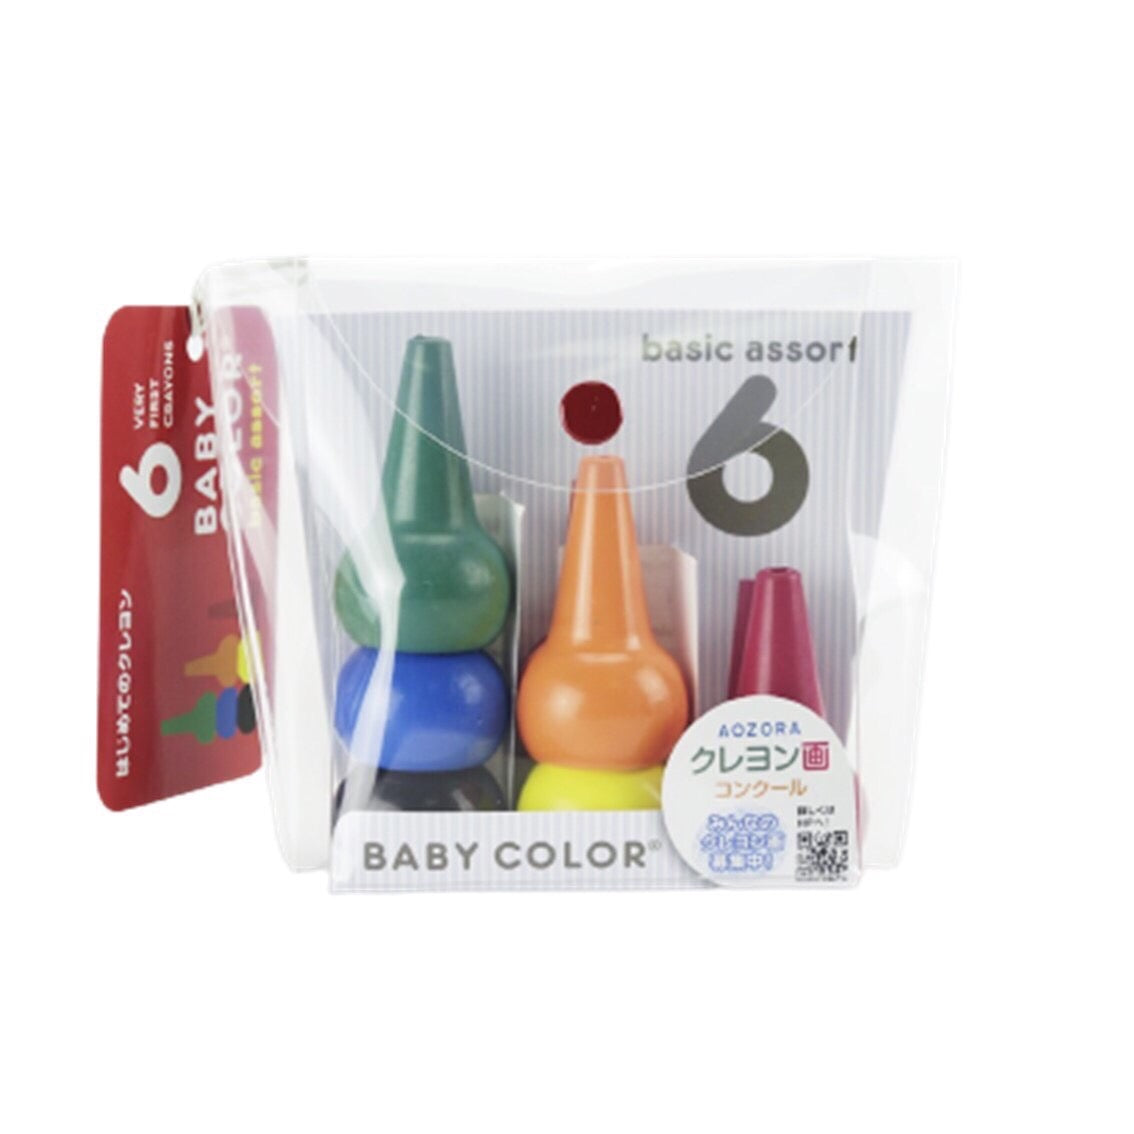 Aozora Baby Color Basic 6